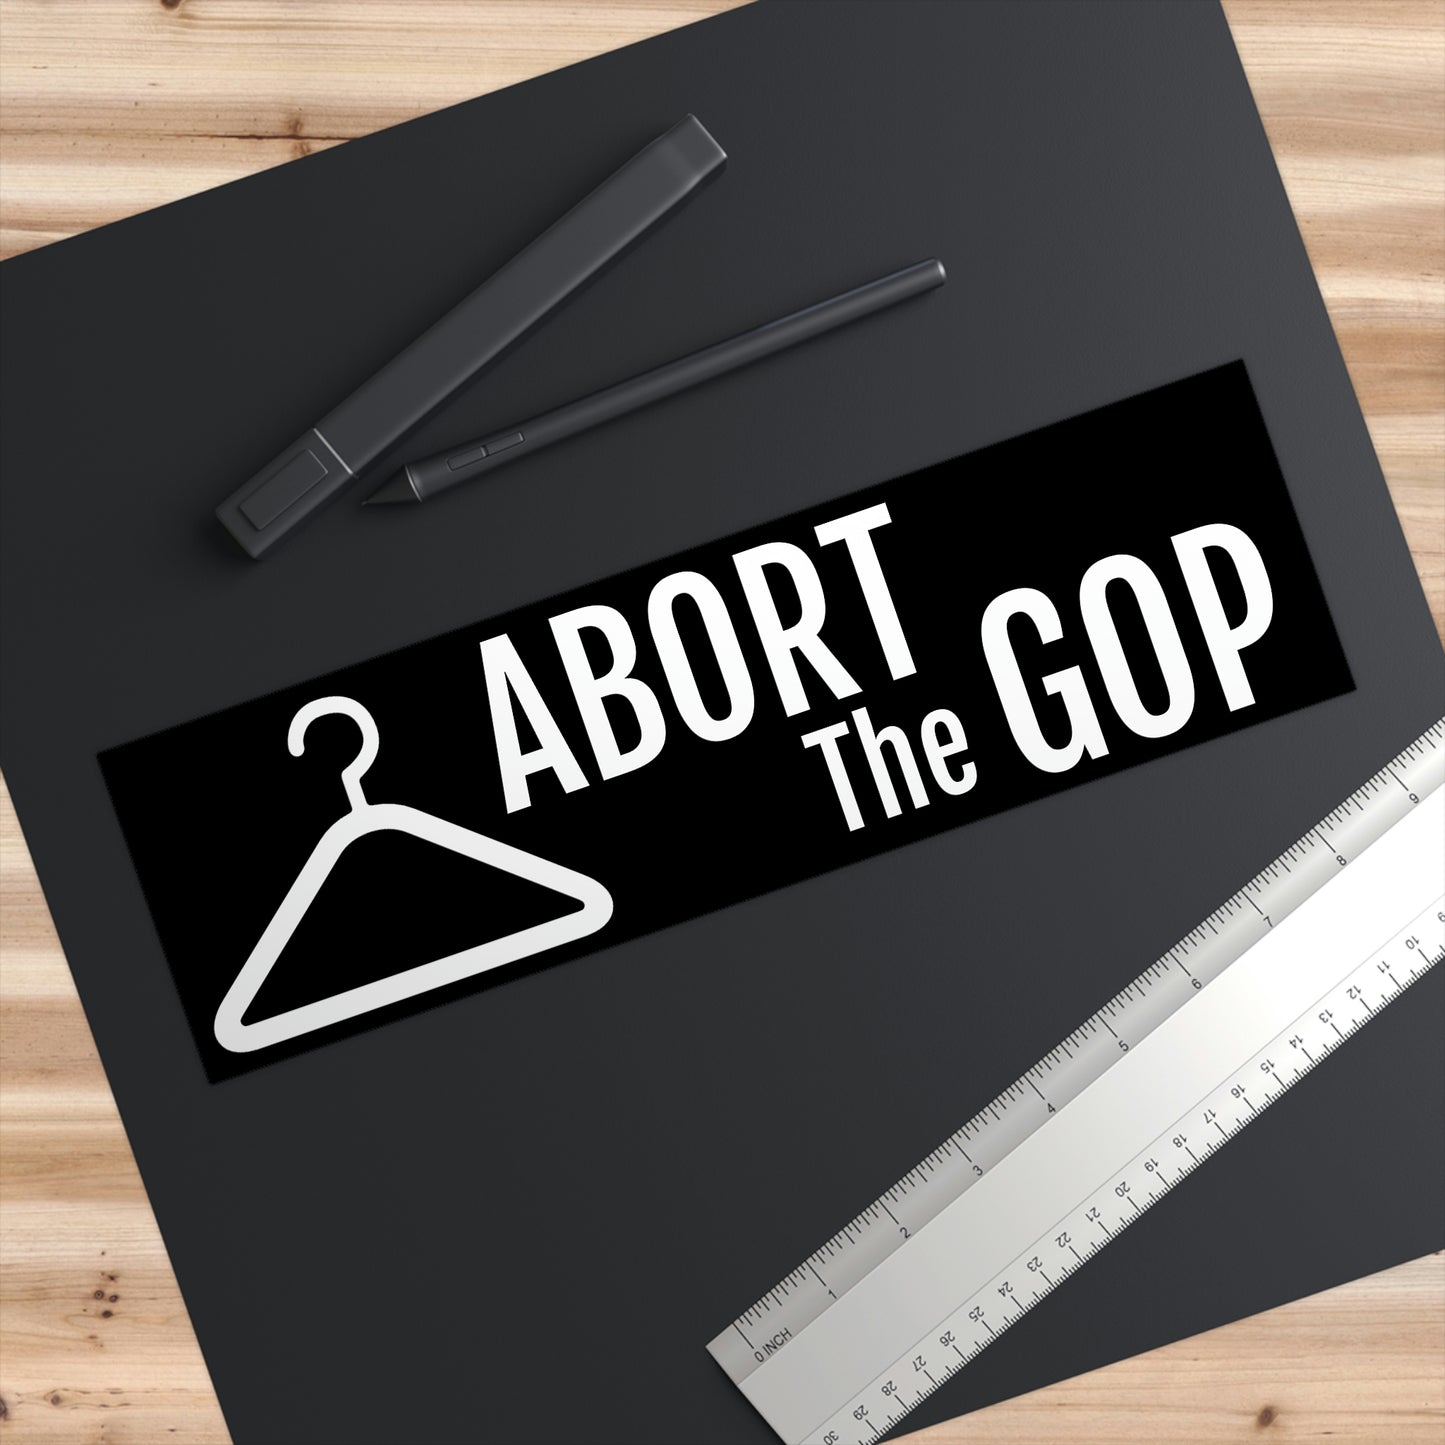 ABORT THE GOP Bumper Stickers